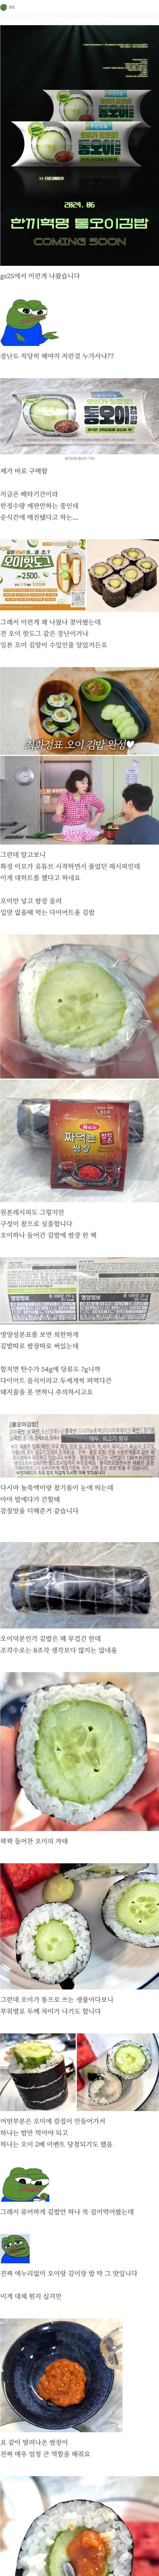 GS25 통오이 김밥이랑 평냉육수 후기 뜸.jpg